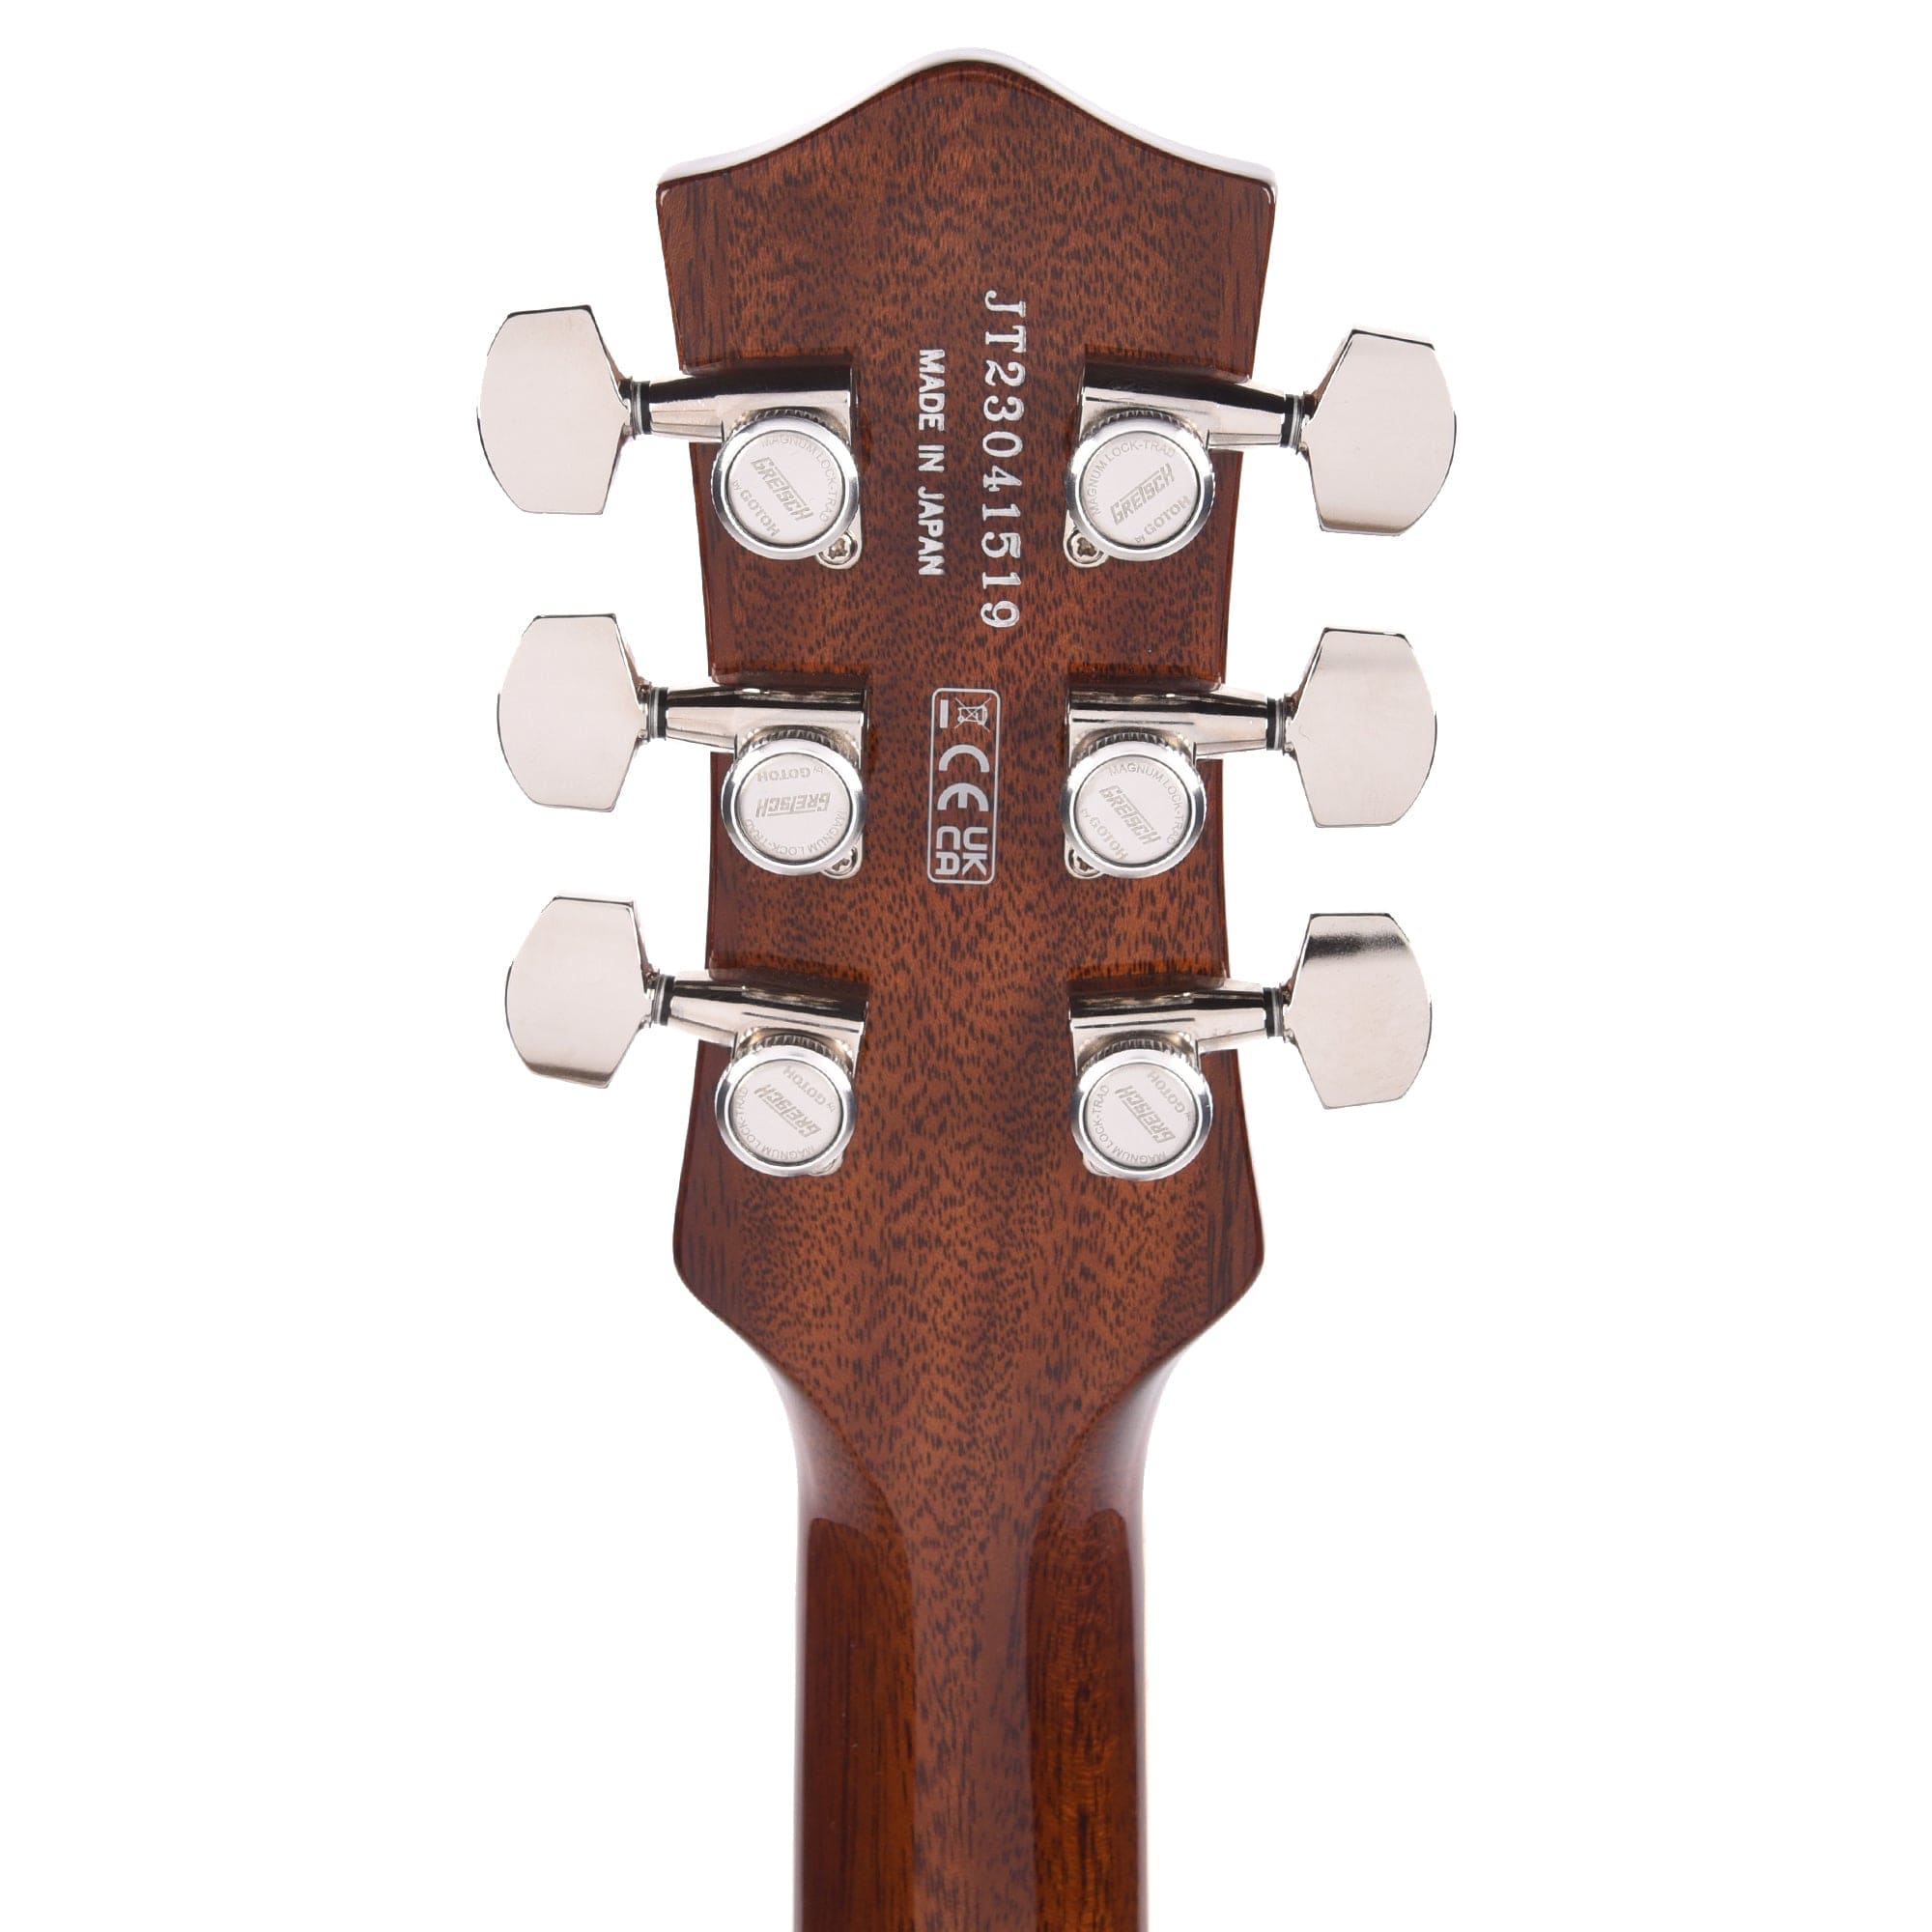 Gretsch G6130T Limited Edition Sidewinder w/String-Thru Bigsby Bourbon Stain Electric Guitars / Solid Body